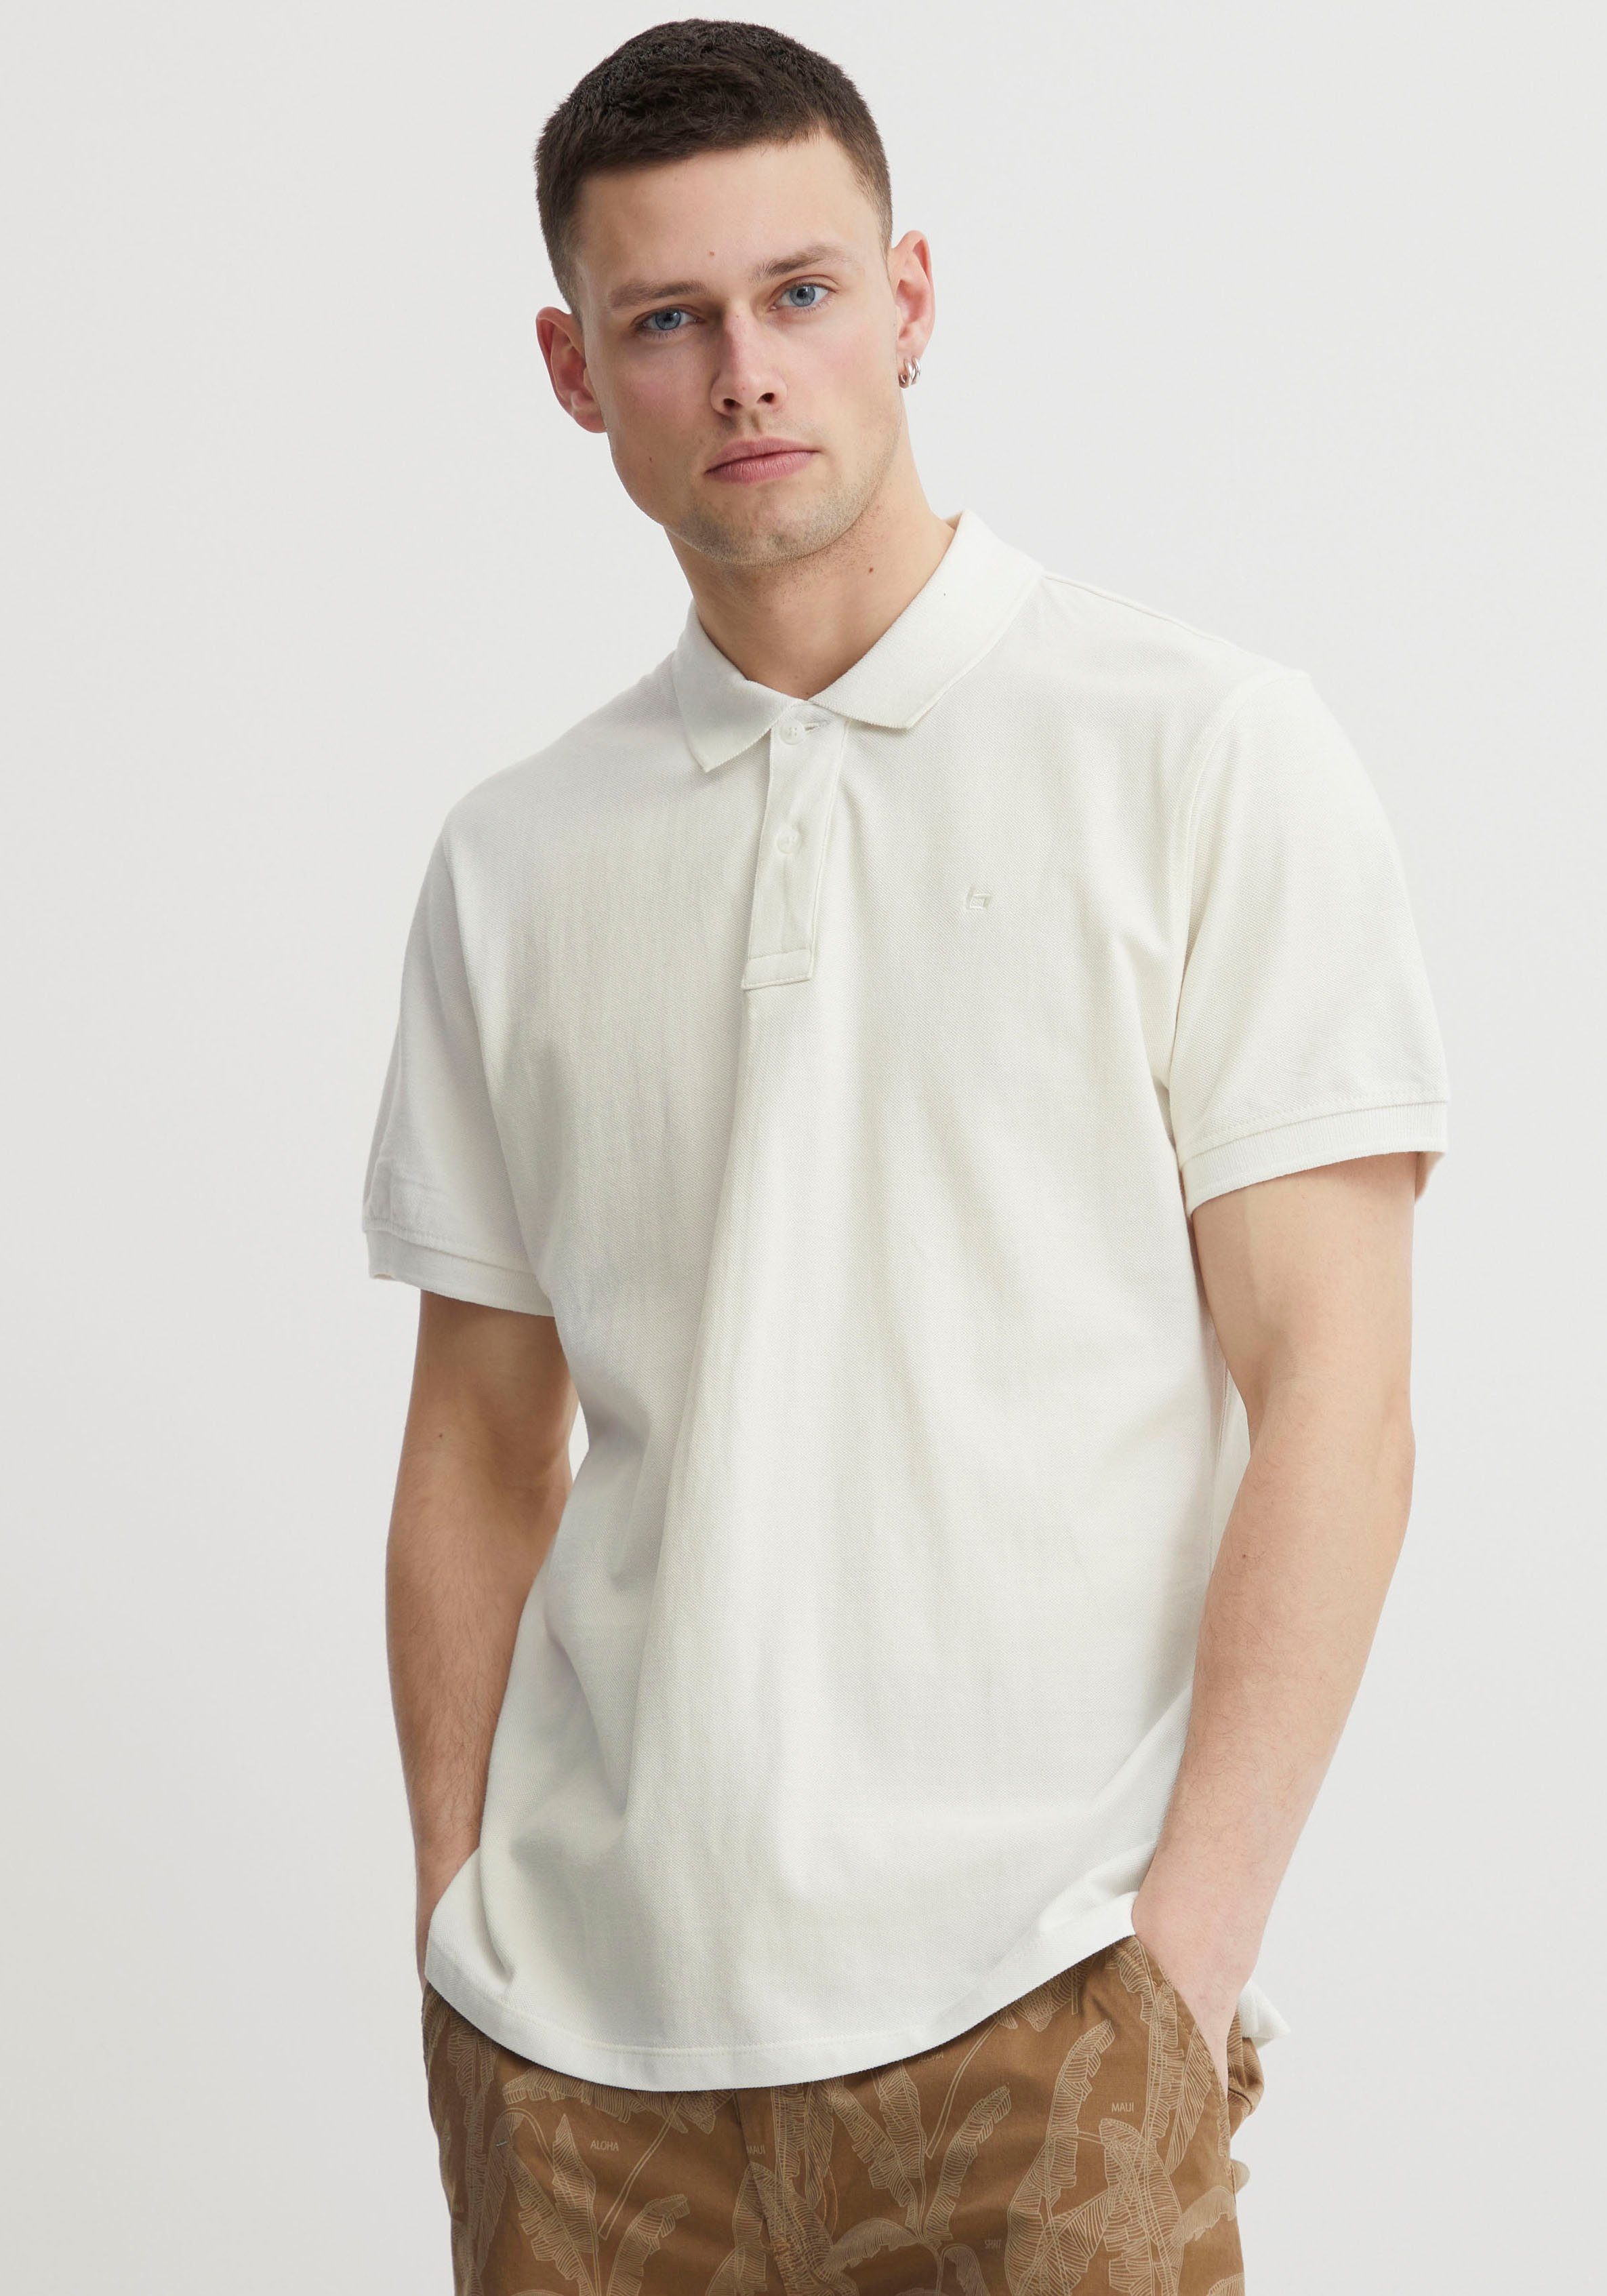 BL-Poloshirt white Poloshirt Blend